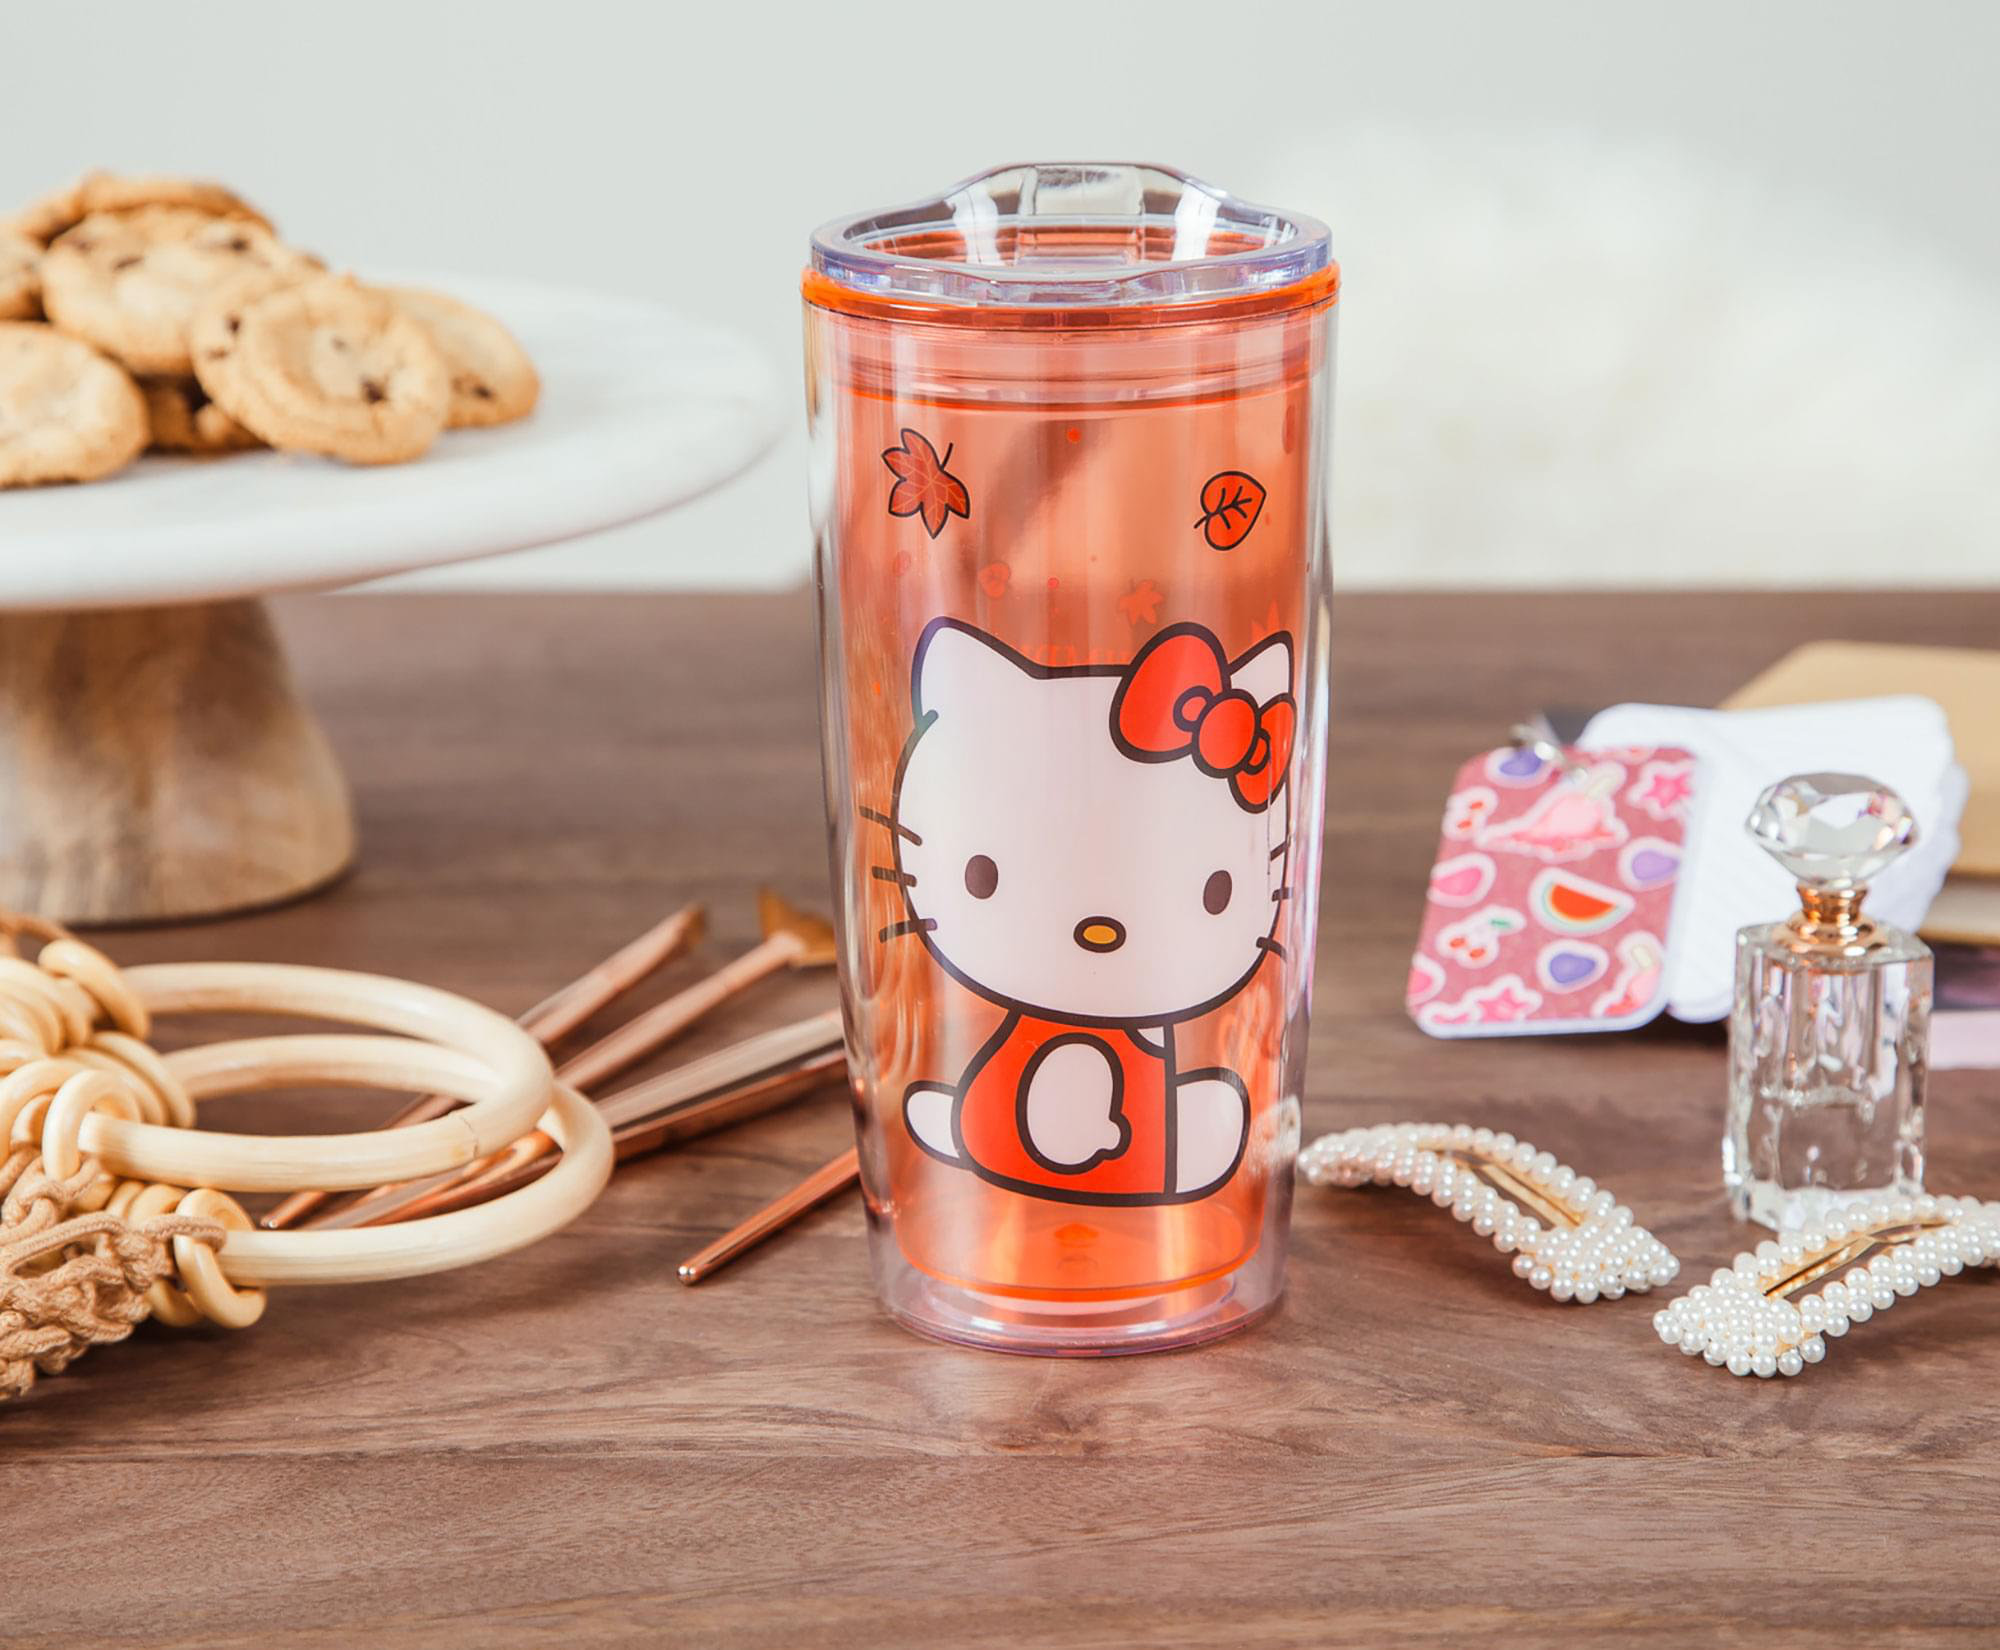 Sanrio Dining | Sanrio My Melody 20oz Coffee Tea Mug | Color: Pink/White | Size: Os | W0rthit's Closet